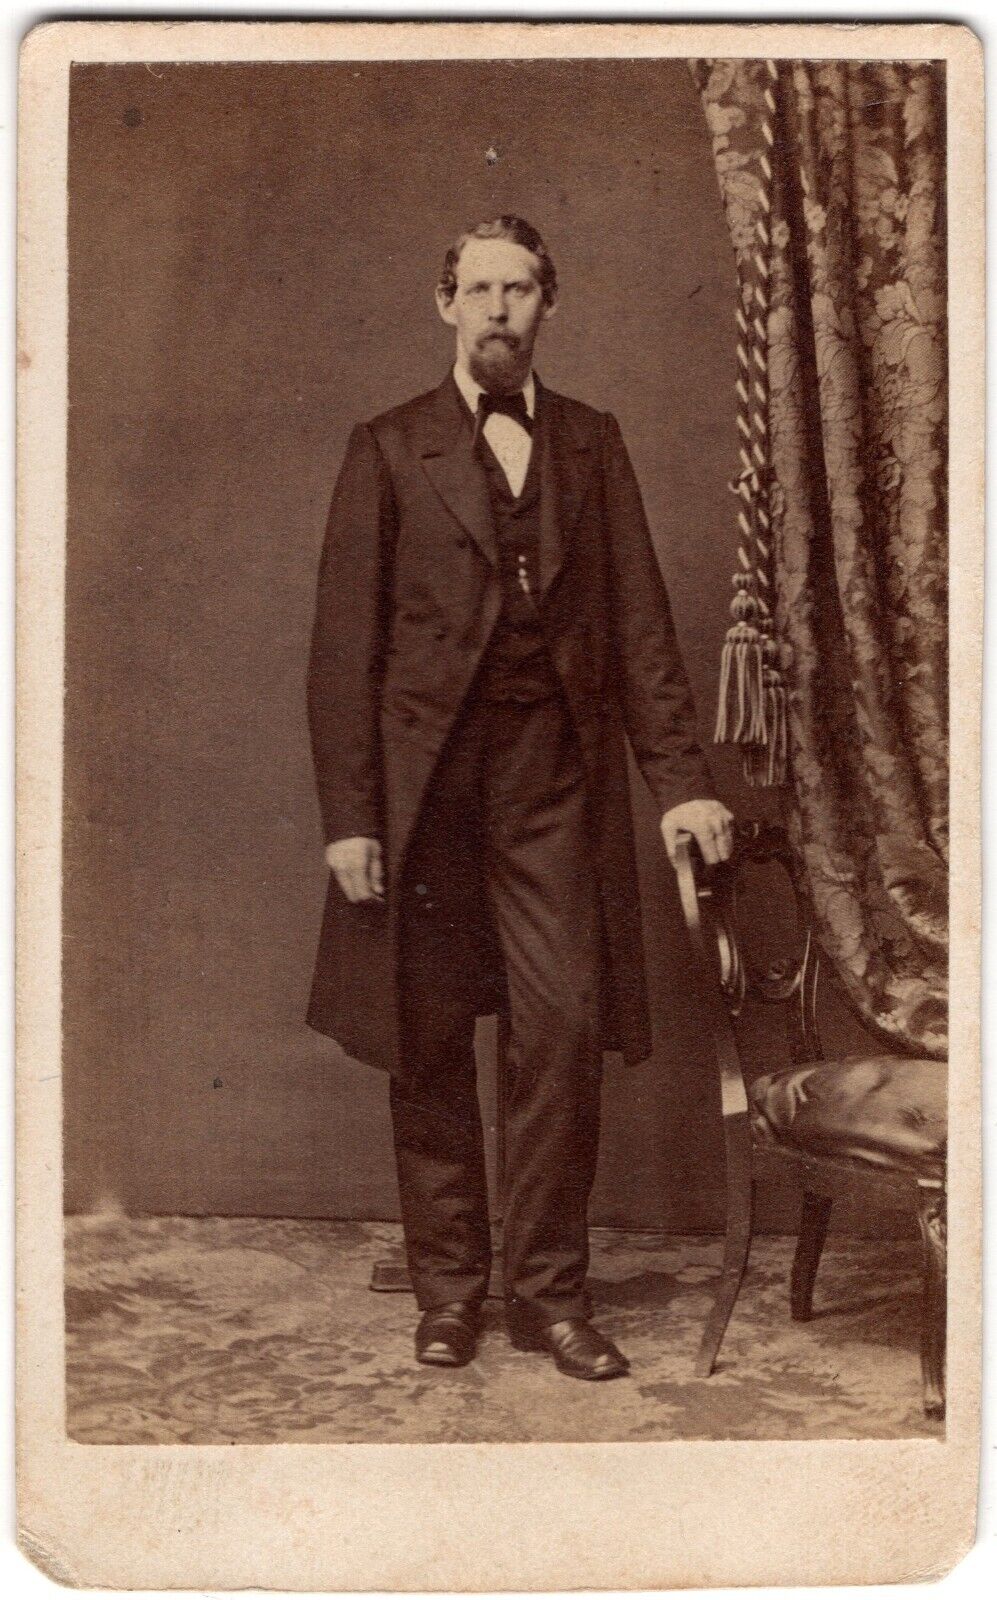 1862 CDV B.R. SWIFT BEARDED MAN IN SUIT NAMED CIVIL WAR ERA